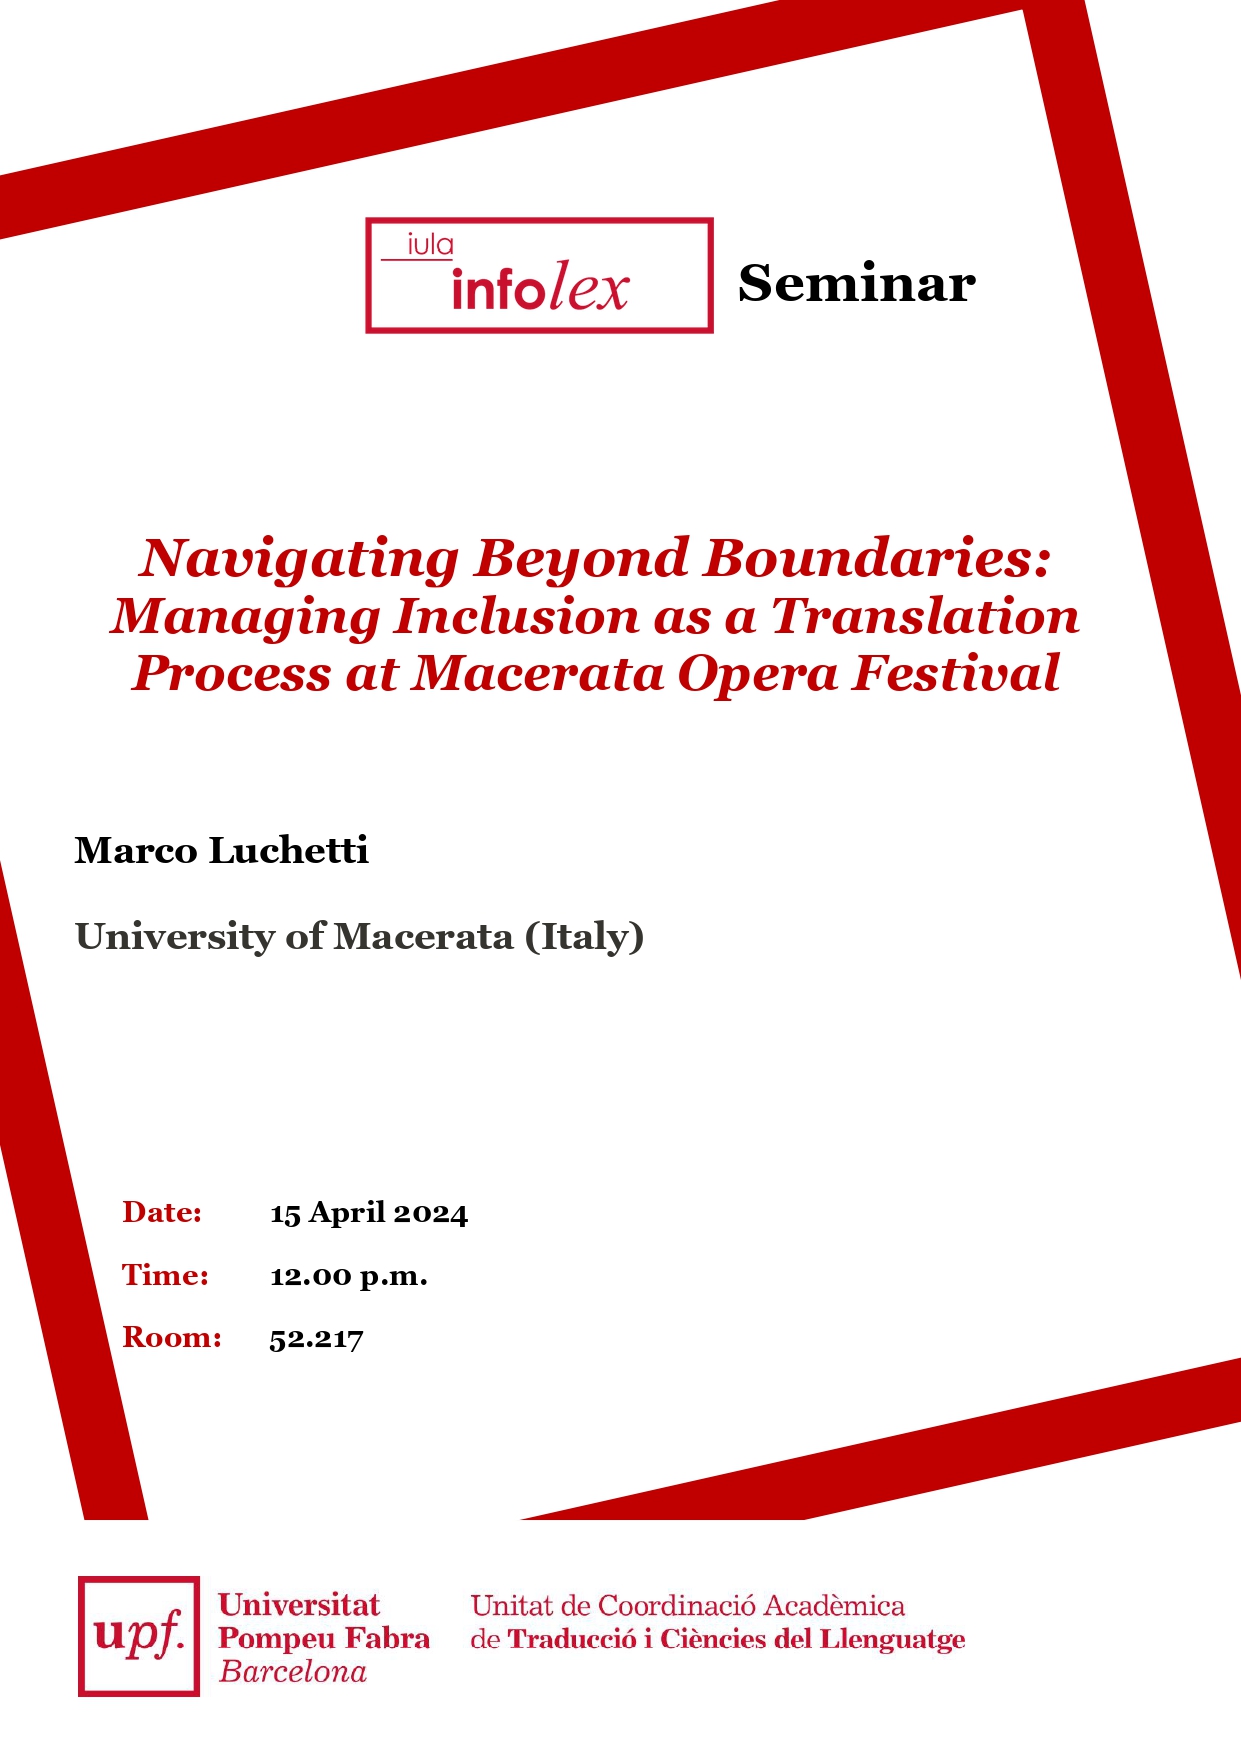 15/04/2024 Seminari del grup InfoLex, a càrrec de Marco Luchetti (University of Macerata-Italy)